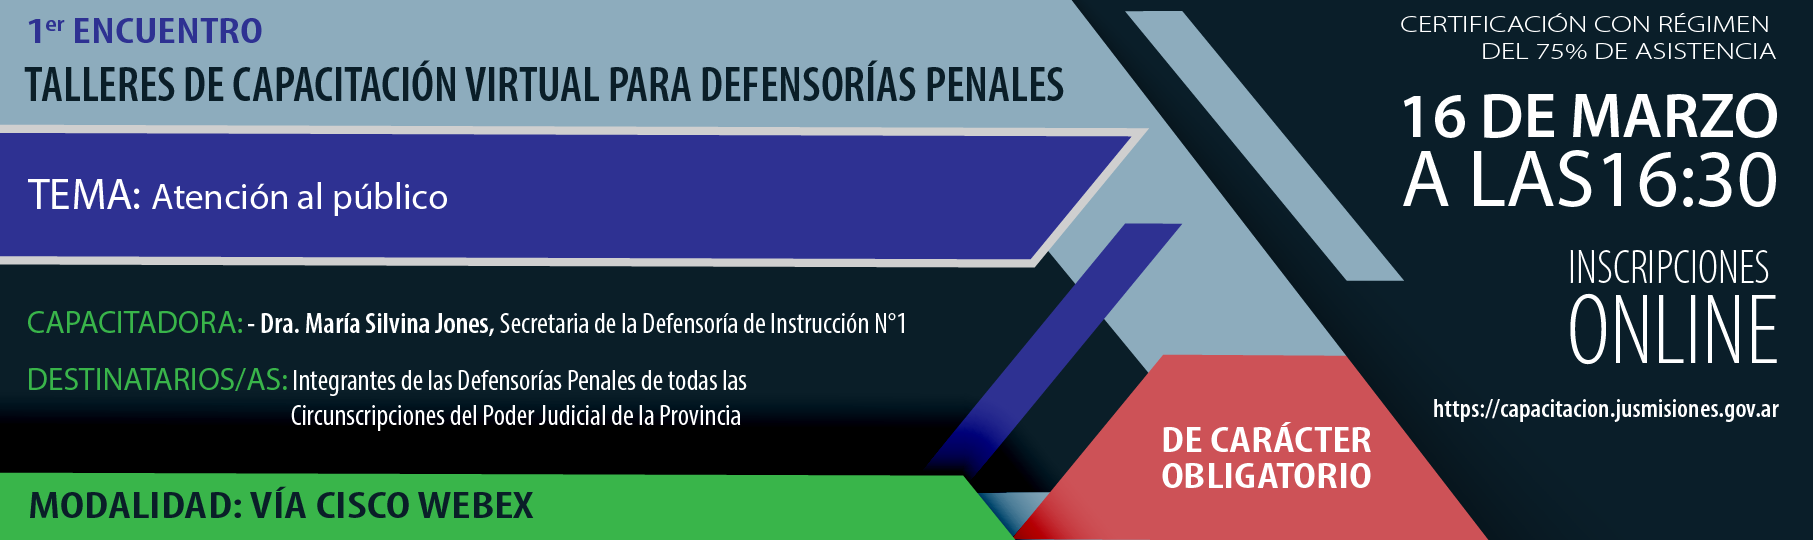 Cr_Talleres_de_cap_virtual_para_Defensoras_penales-01